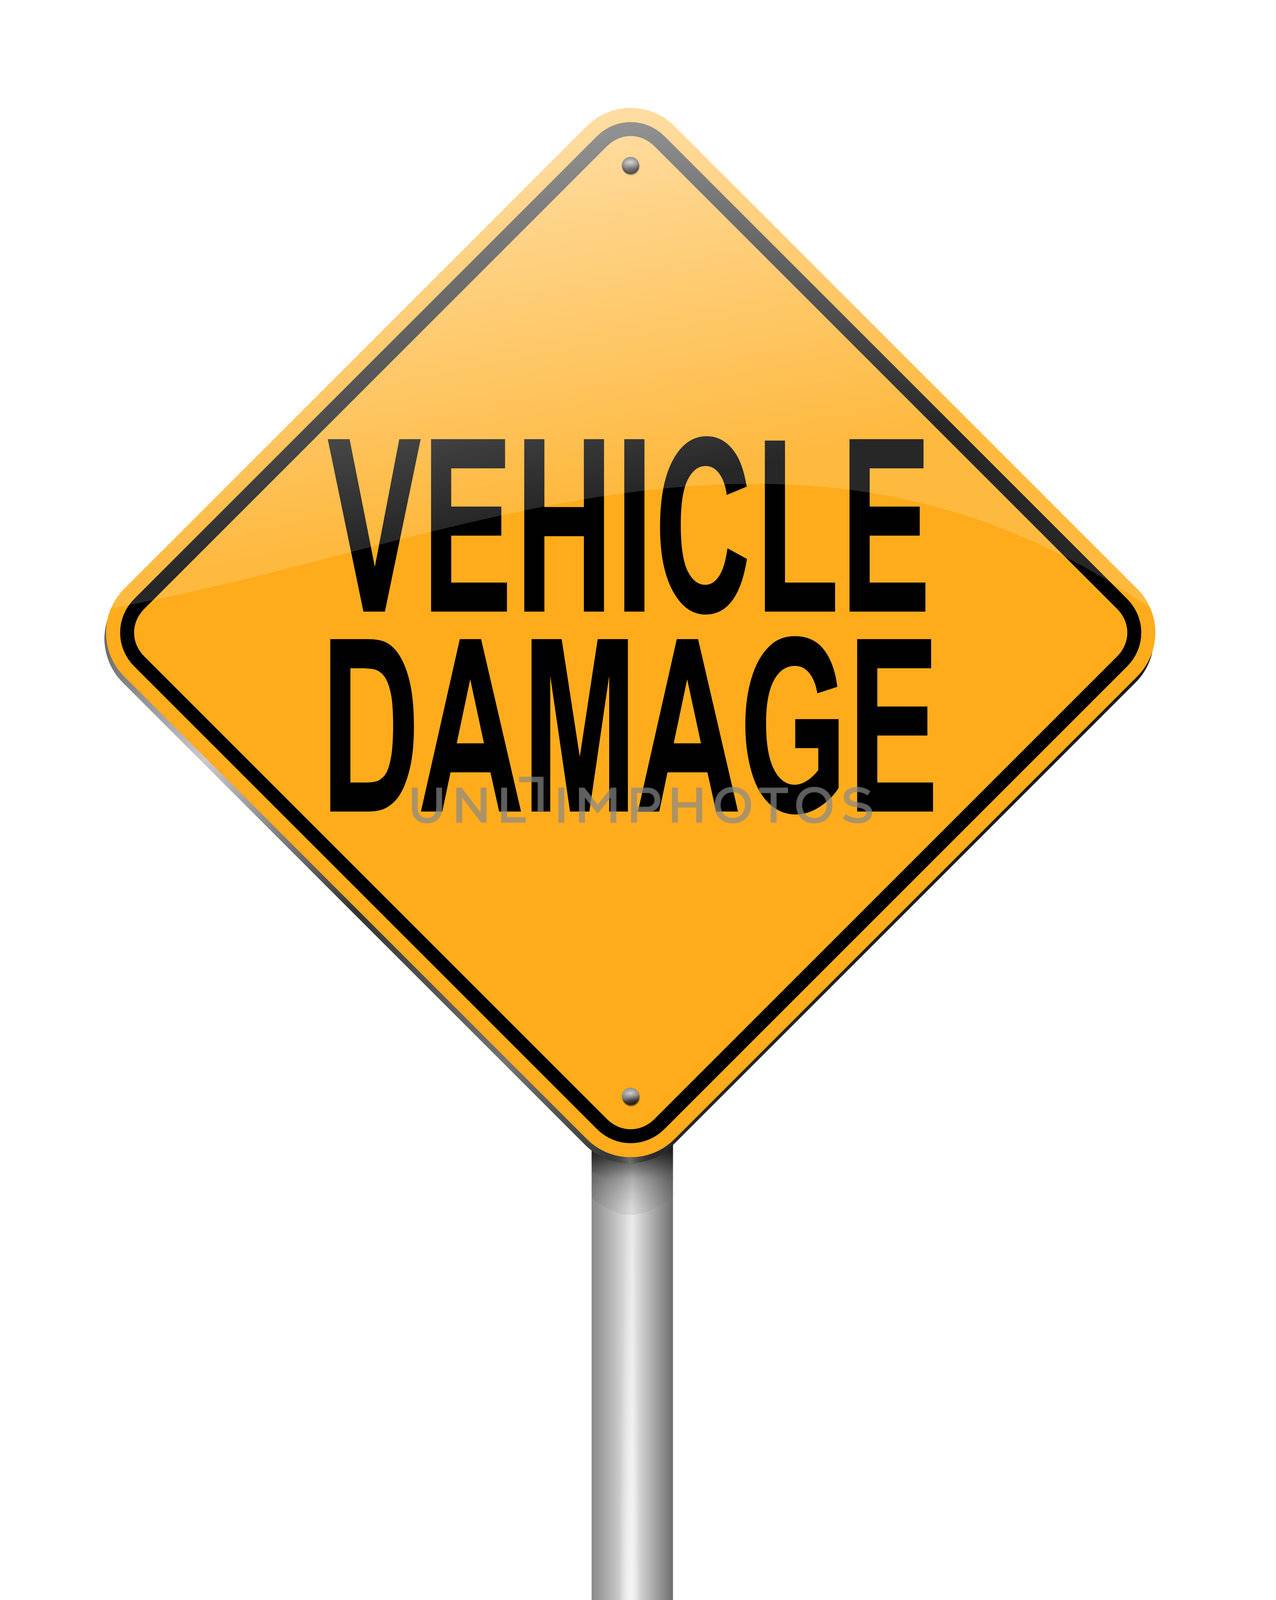 Vehicle damage sign. by 72soul